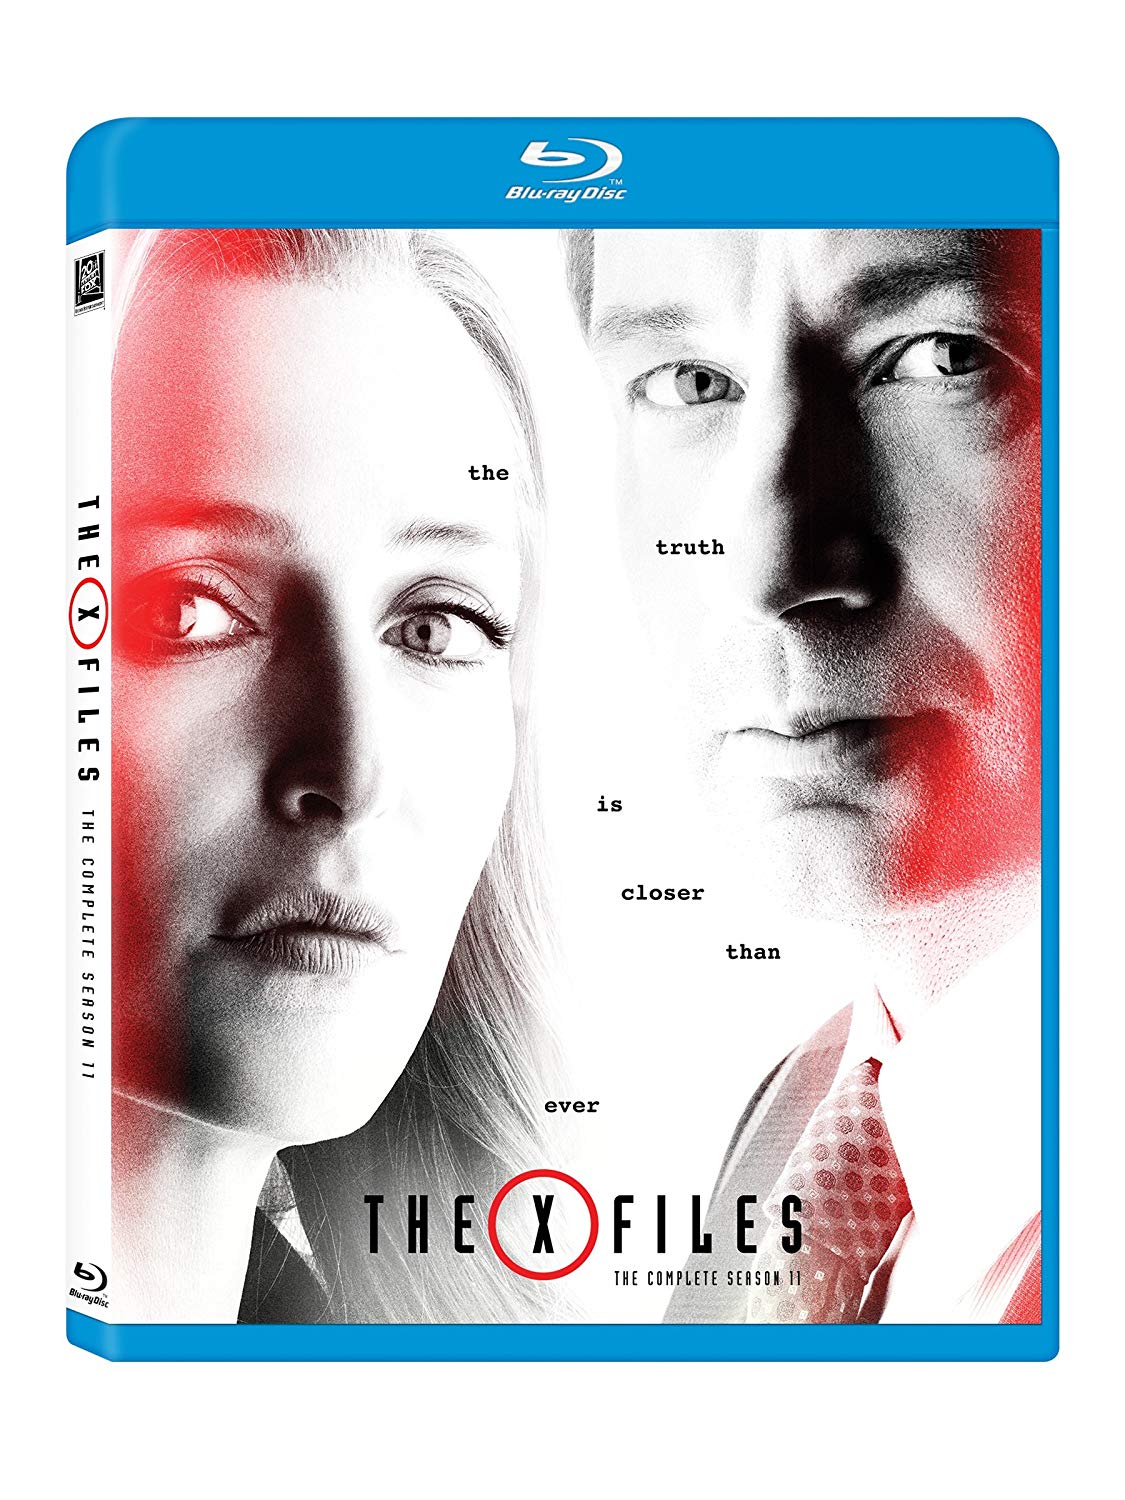 The X-Files Season 11 Blu-Ray Cover (20th Century Fox Home Entertainment)